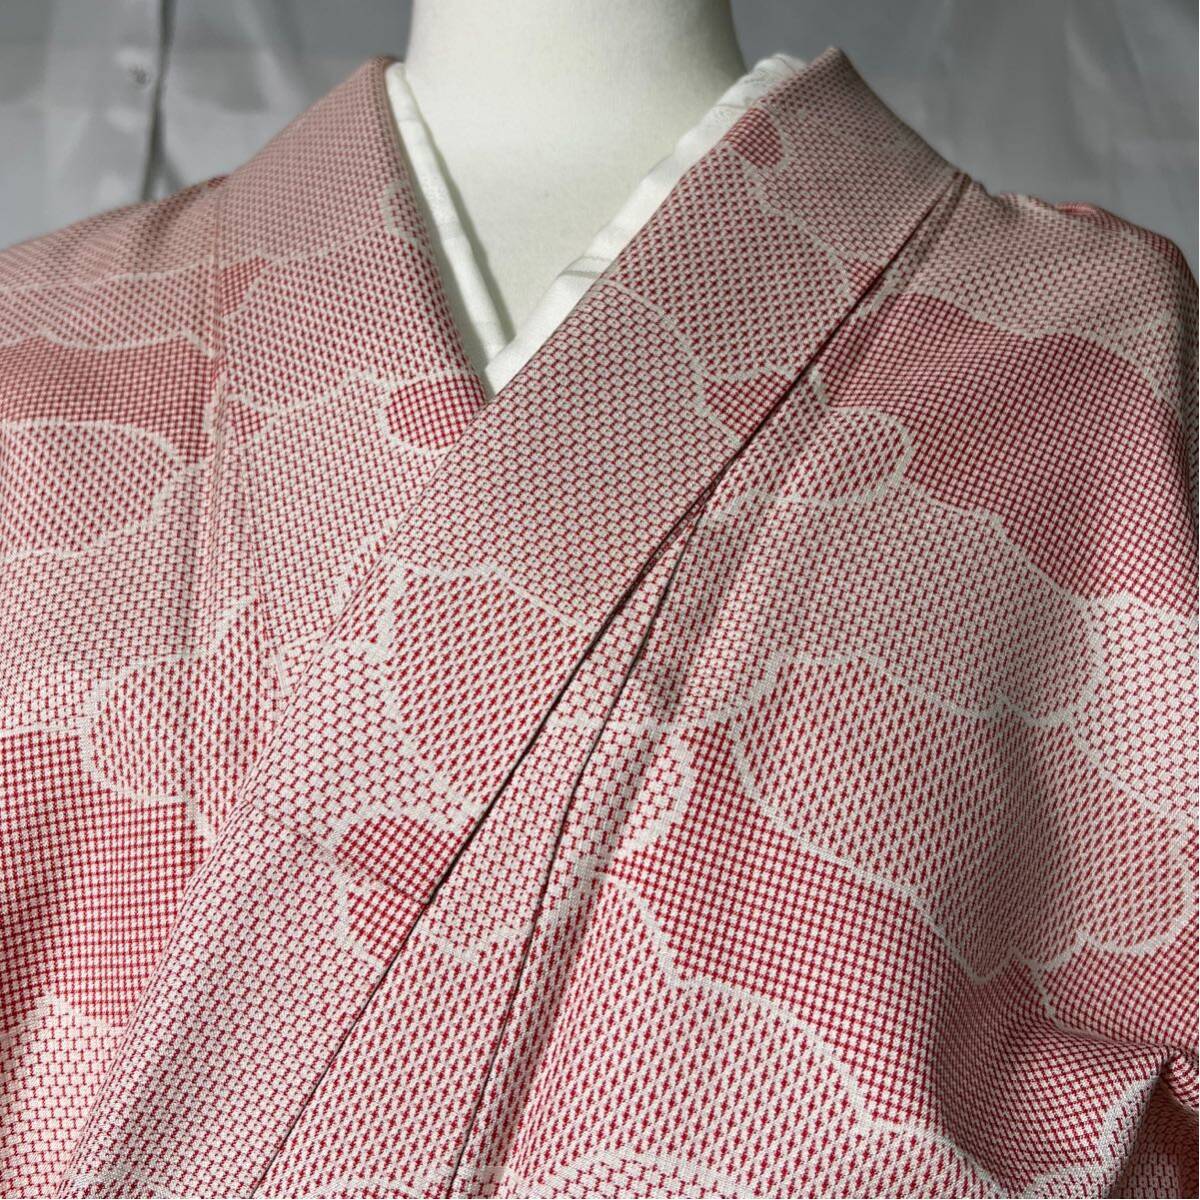 【wellriver】 大島紬 夏用 着物 正絹 単衣 小紋 雲柄 可愛い 身丈160cm 和服 和装 #B540！の画像2